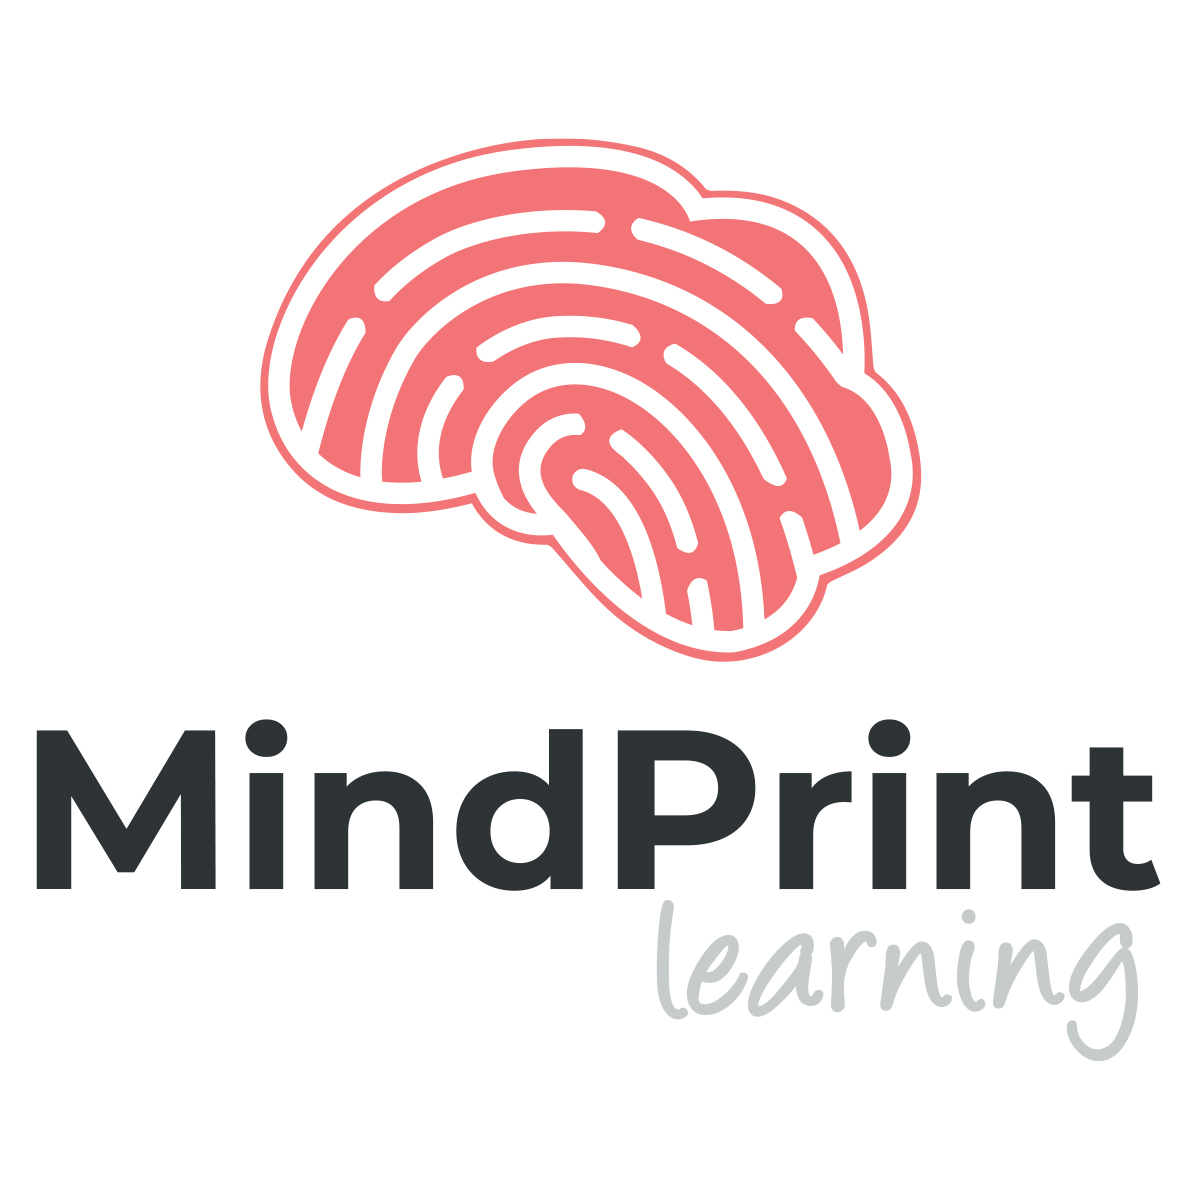 MindPrint Learning logo